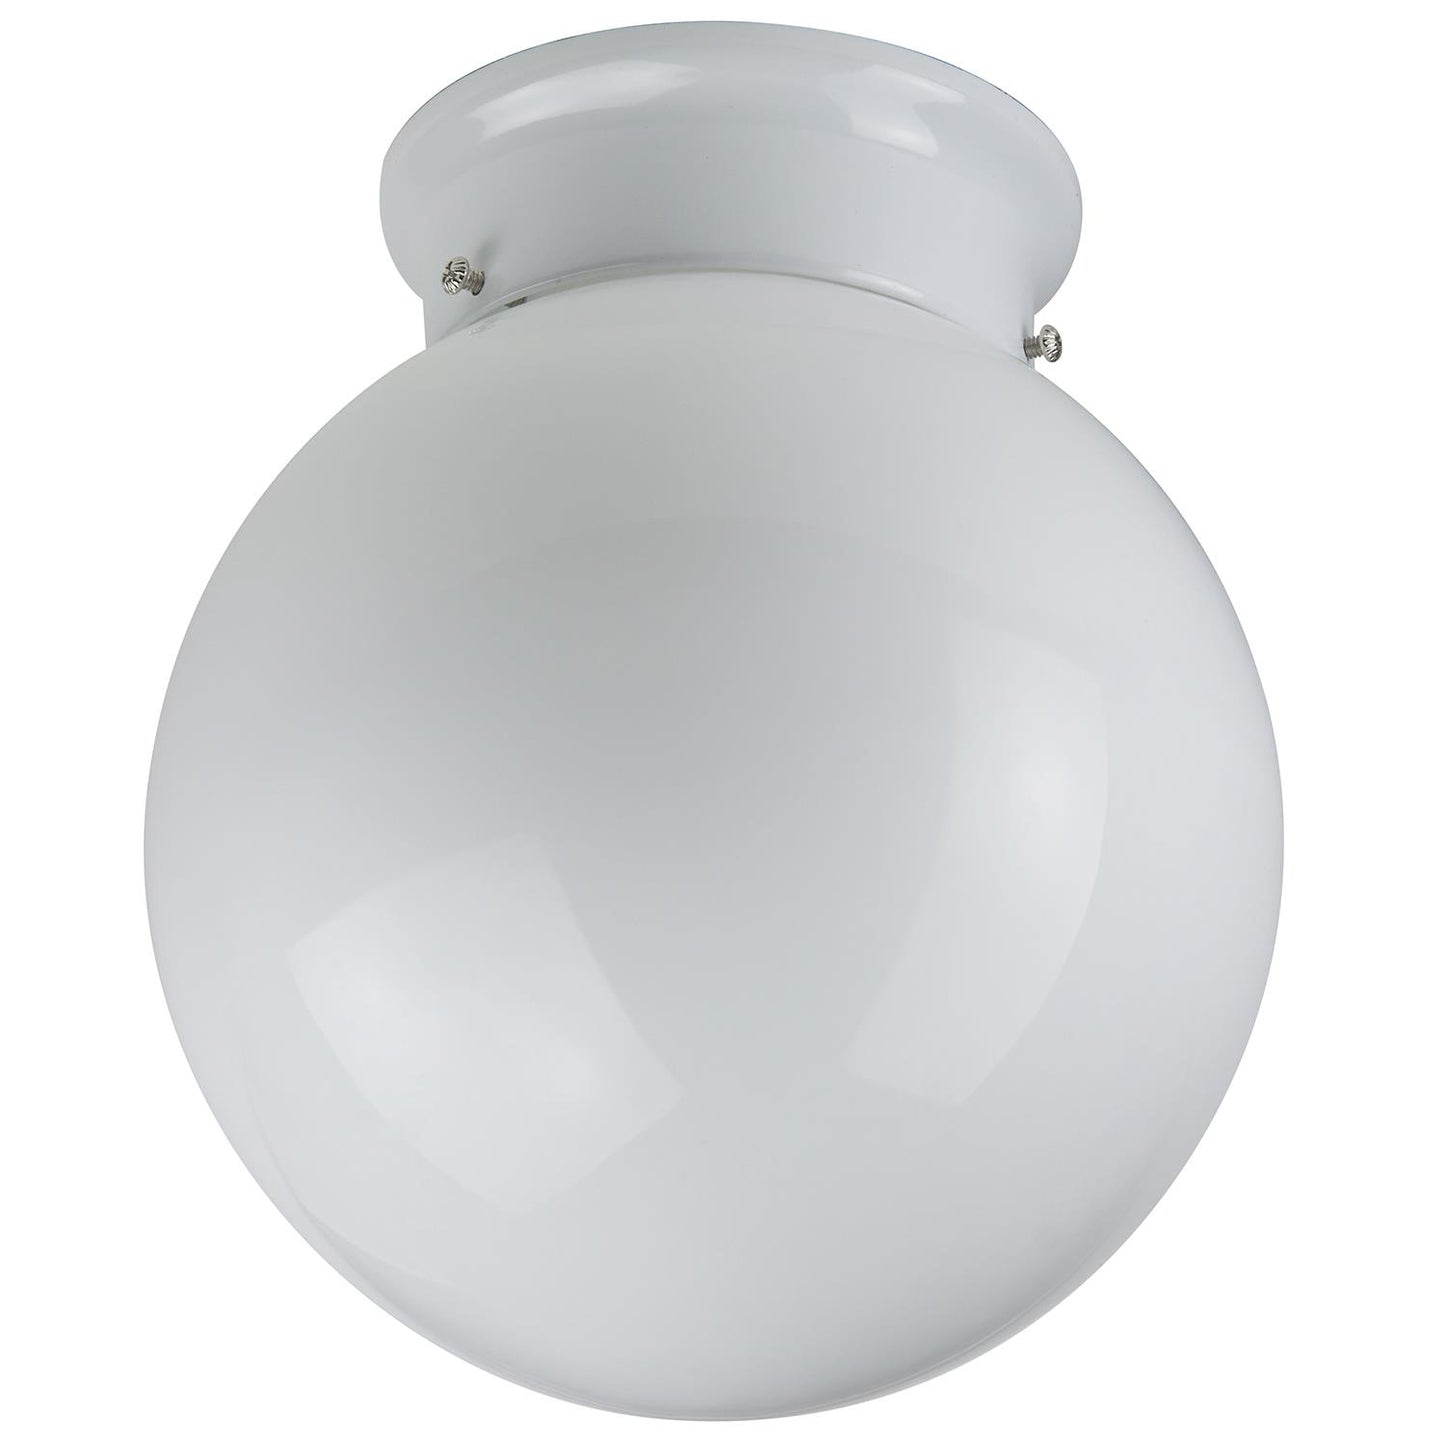 Sunlite 8" Decorative Globe Style Ceiling Fixture, White Finish, White Glass